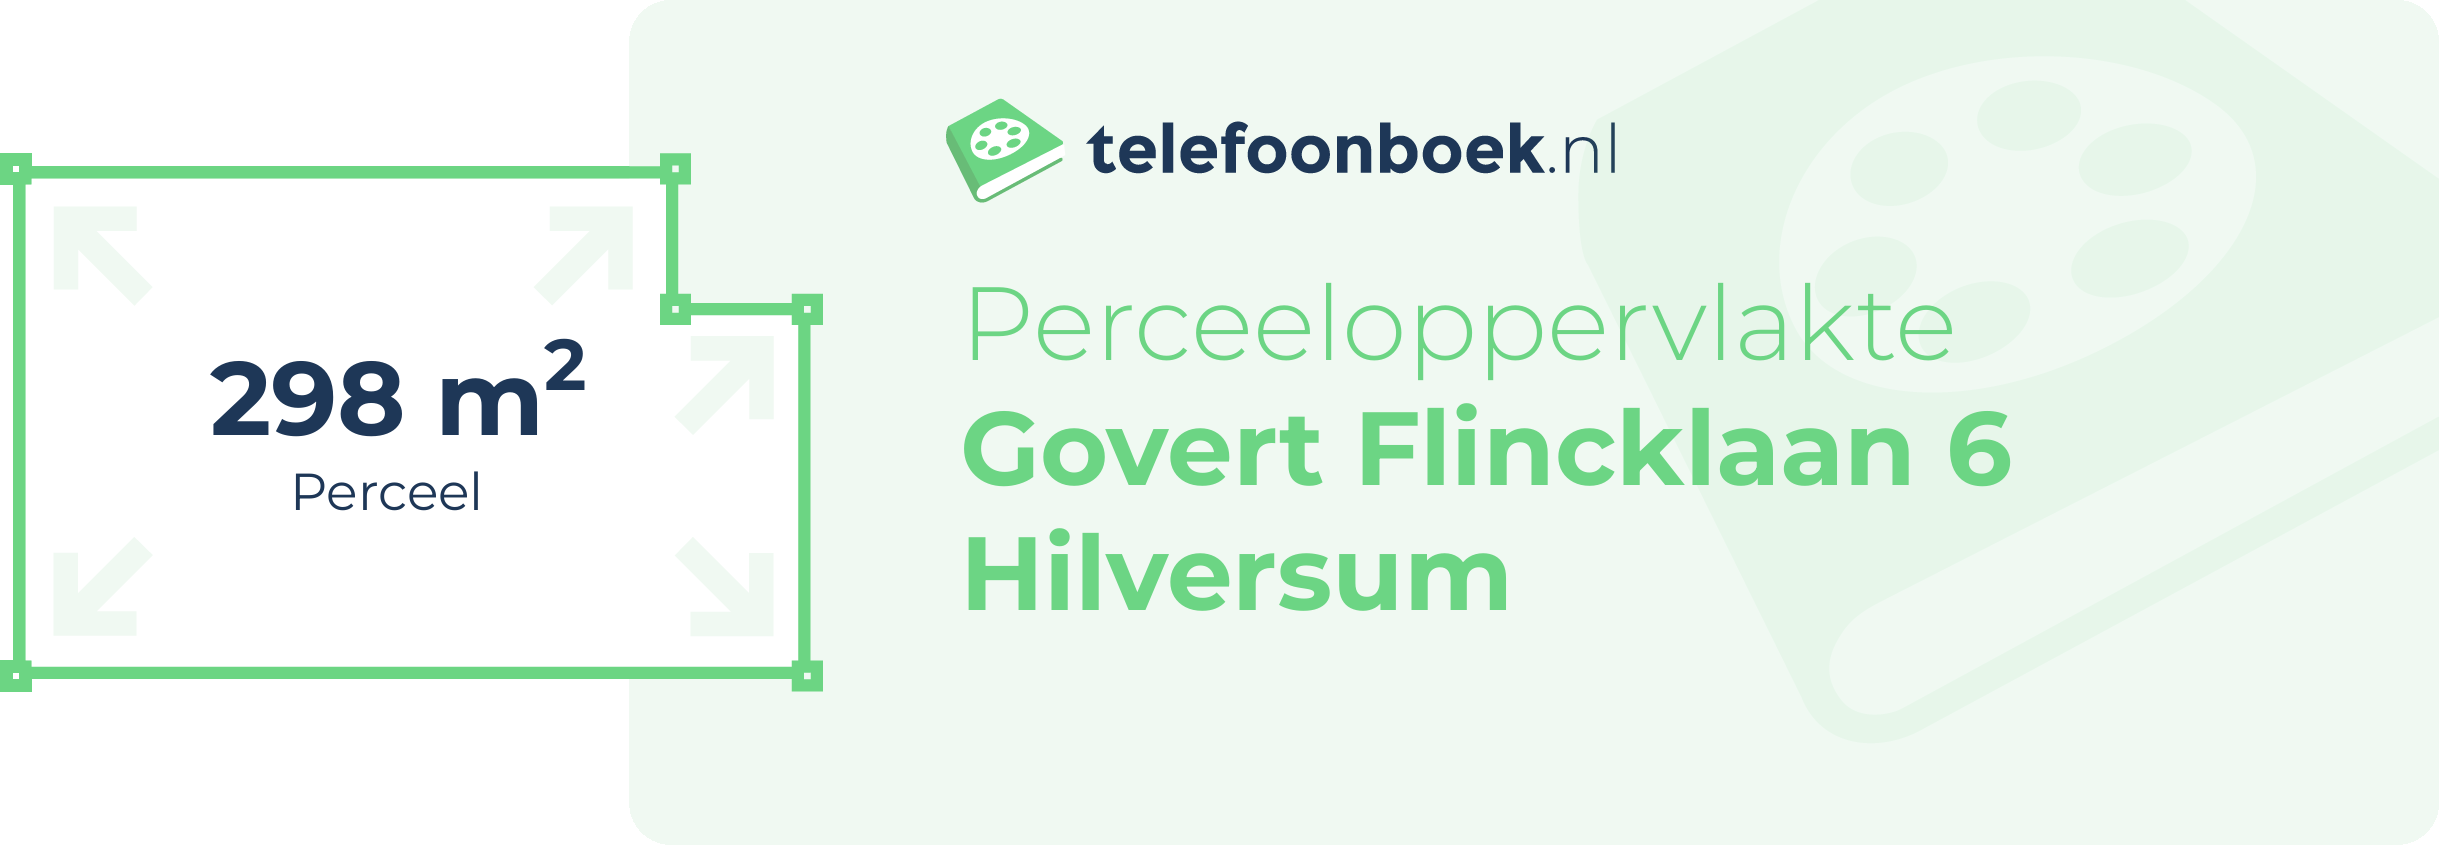 Perceeloppervlakte Govert Flincklaan 6 Hilversum